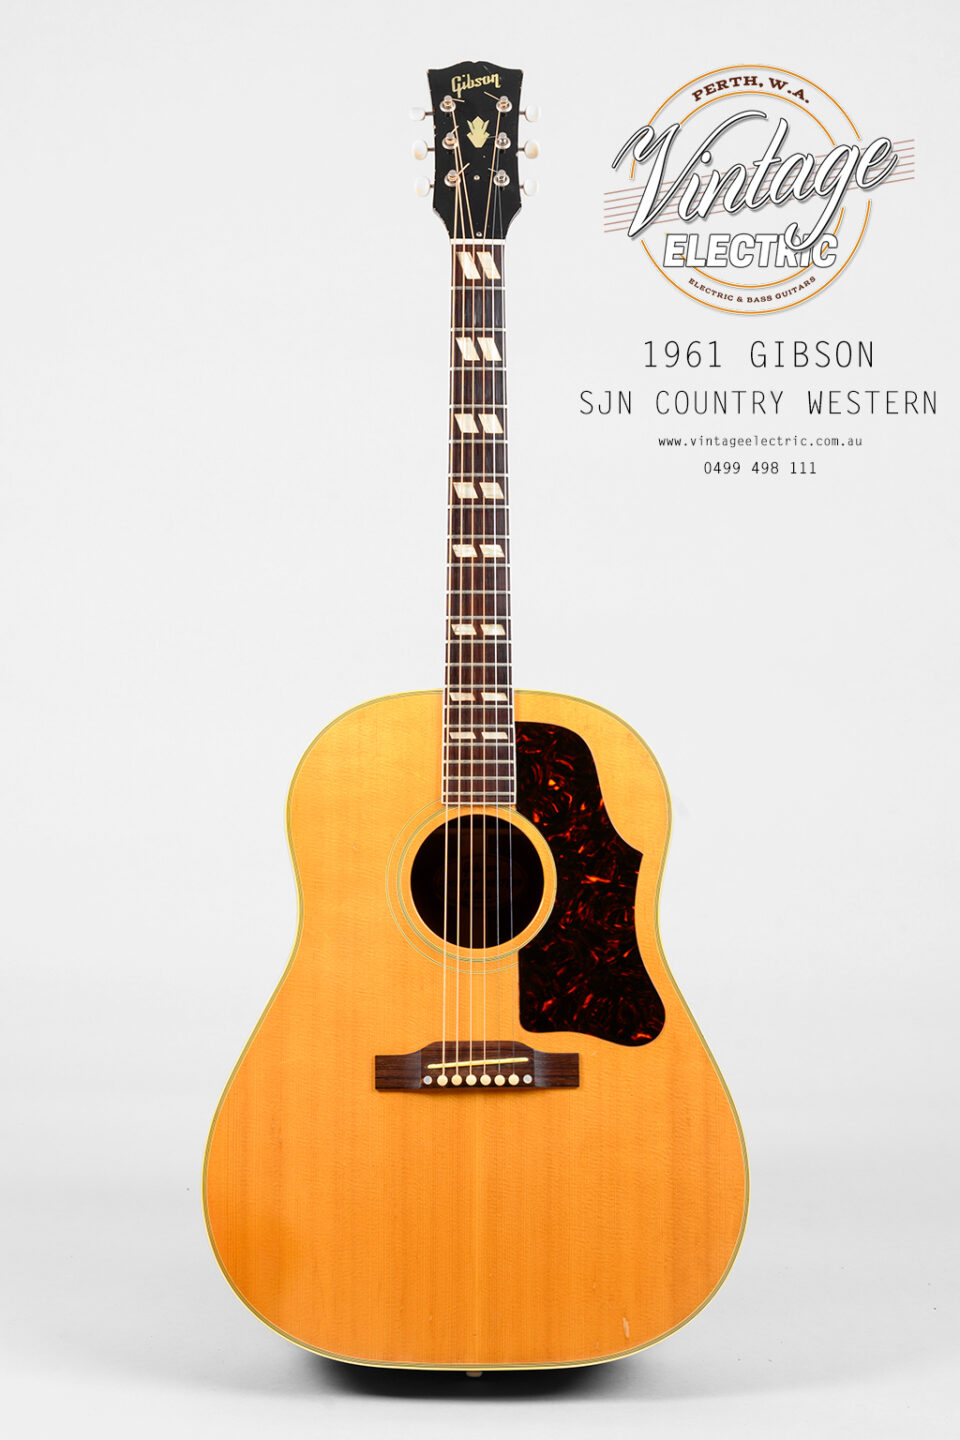 1961 Gibson SJN Country Western Guitar